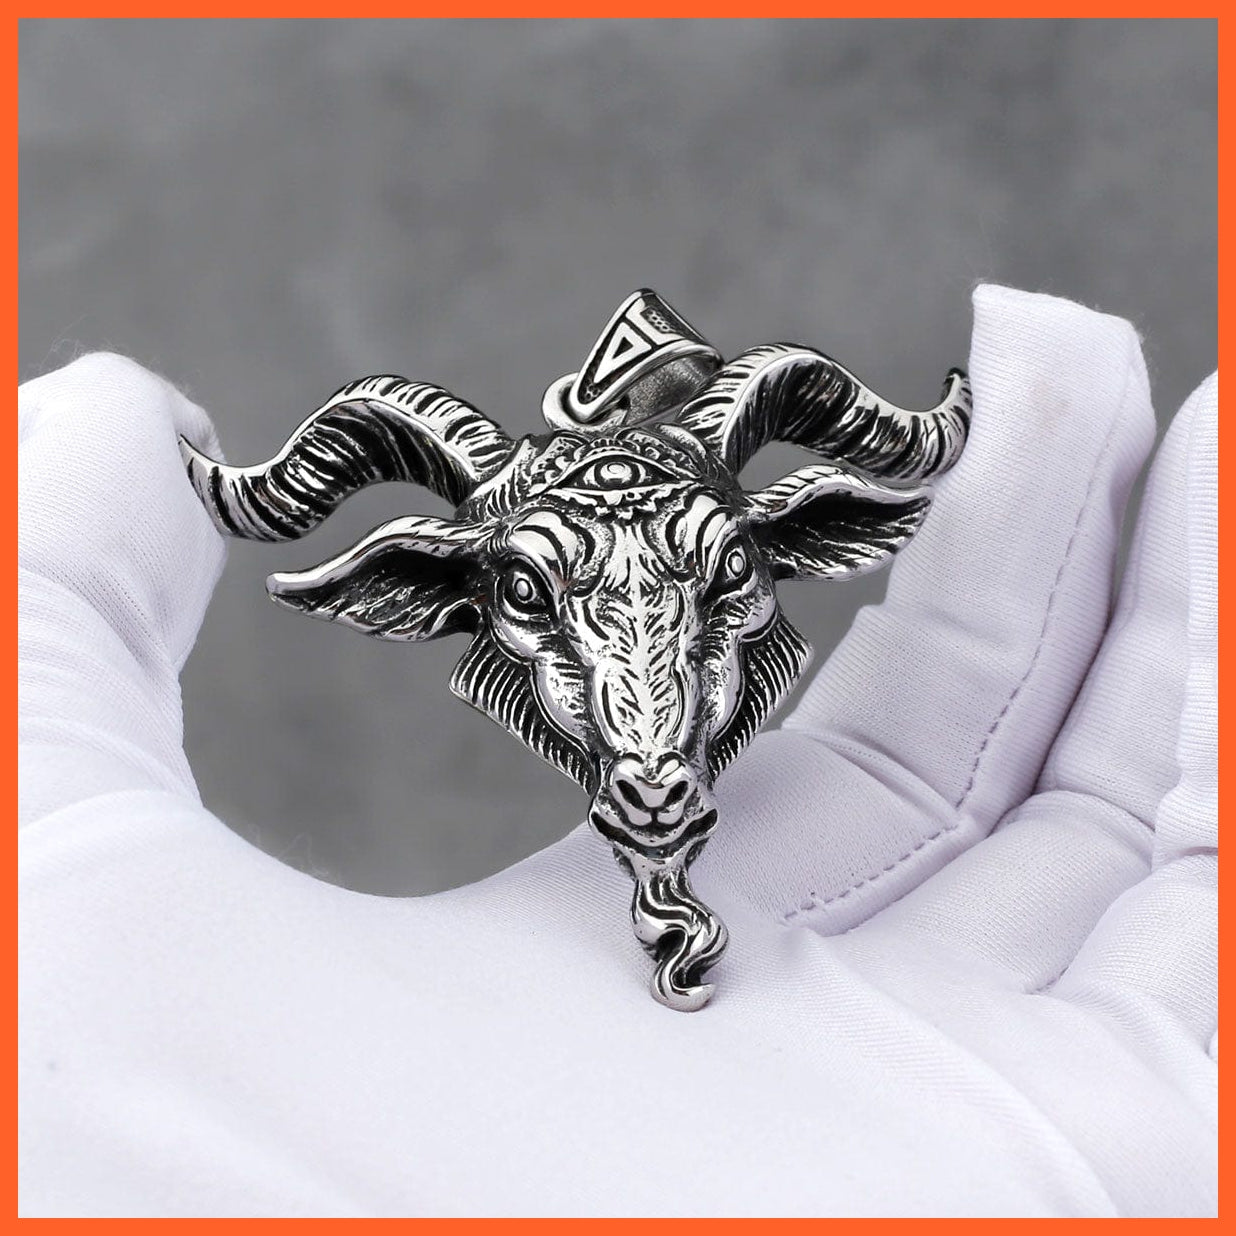 whatagift.uk Stainless Steel Lucifer Satan Ram Charm Pendant Necklace